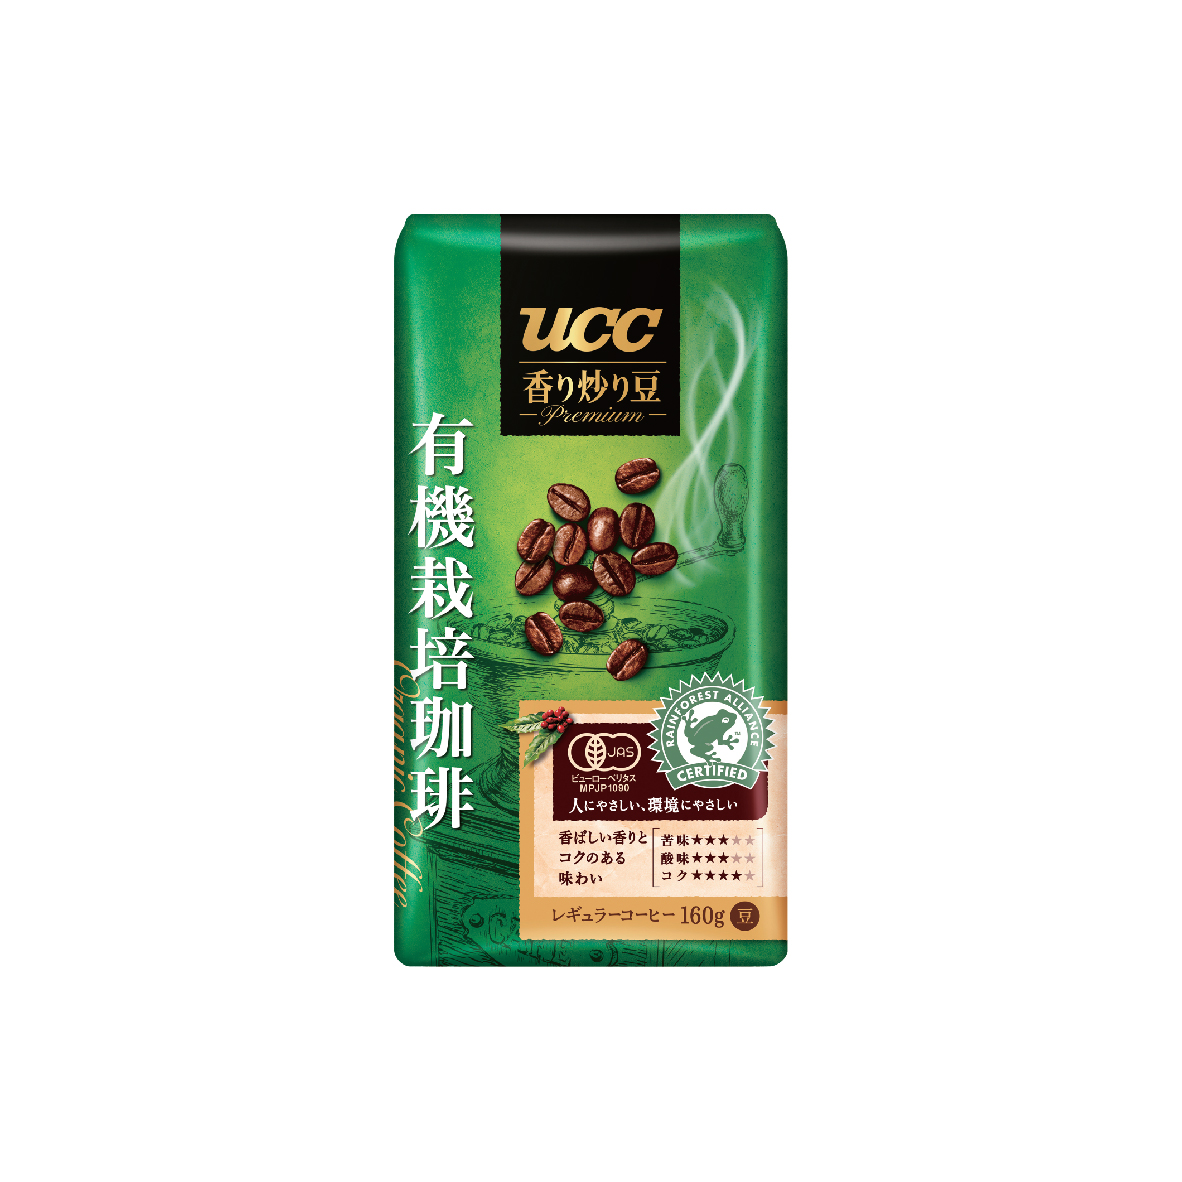 UCC Organic Blend Roasted Coffee Beans